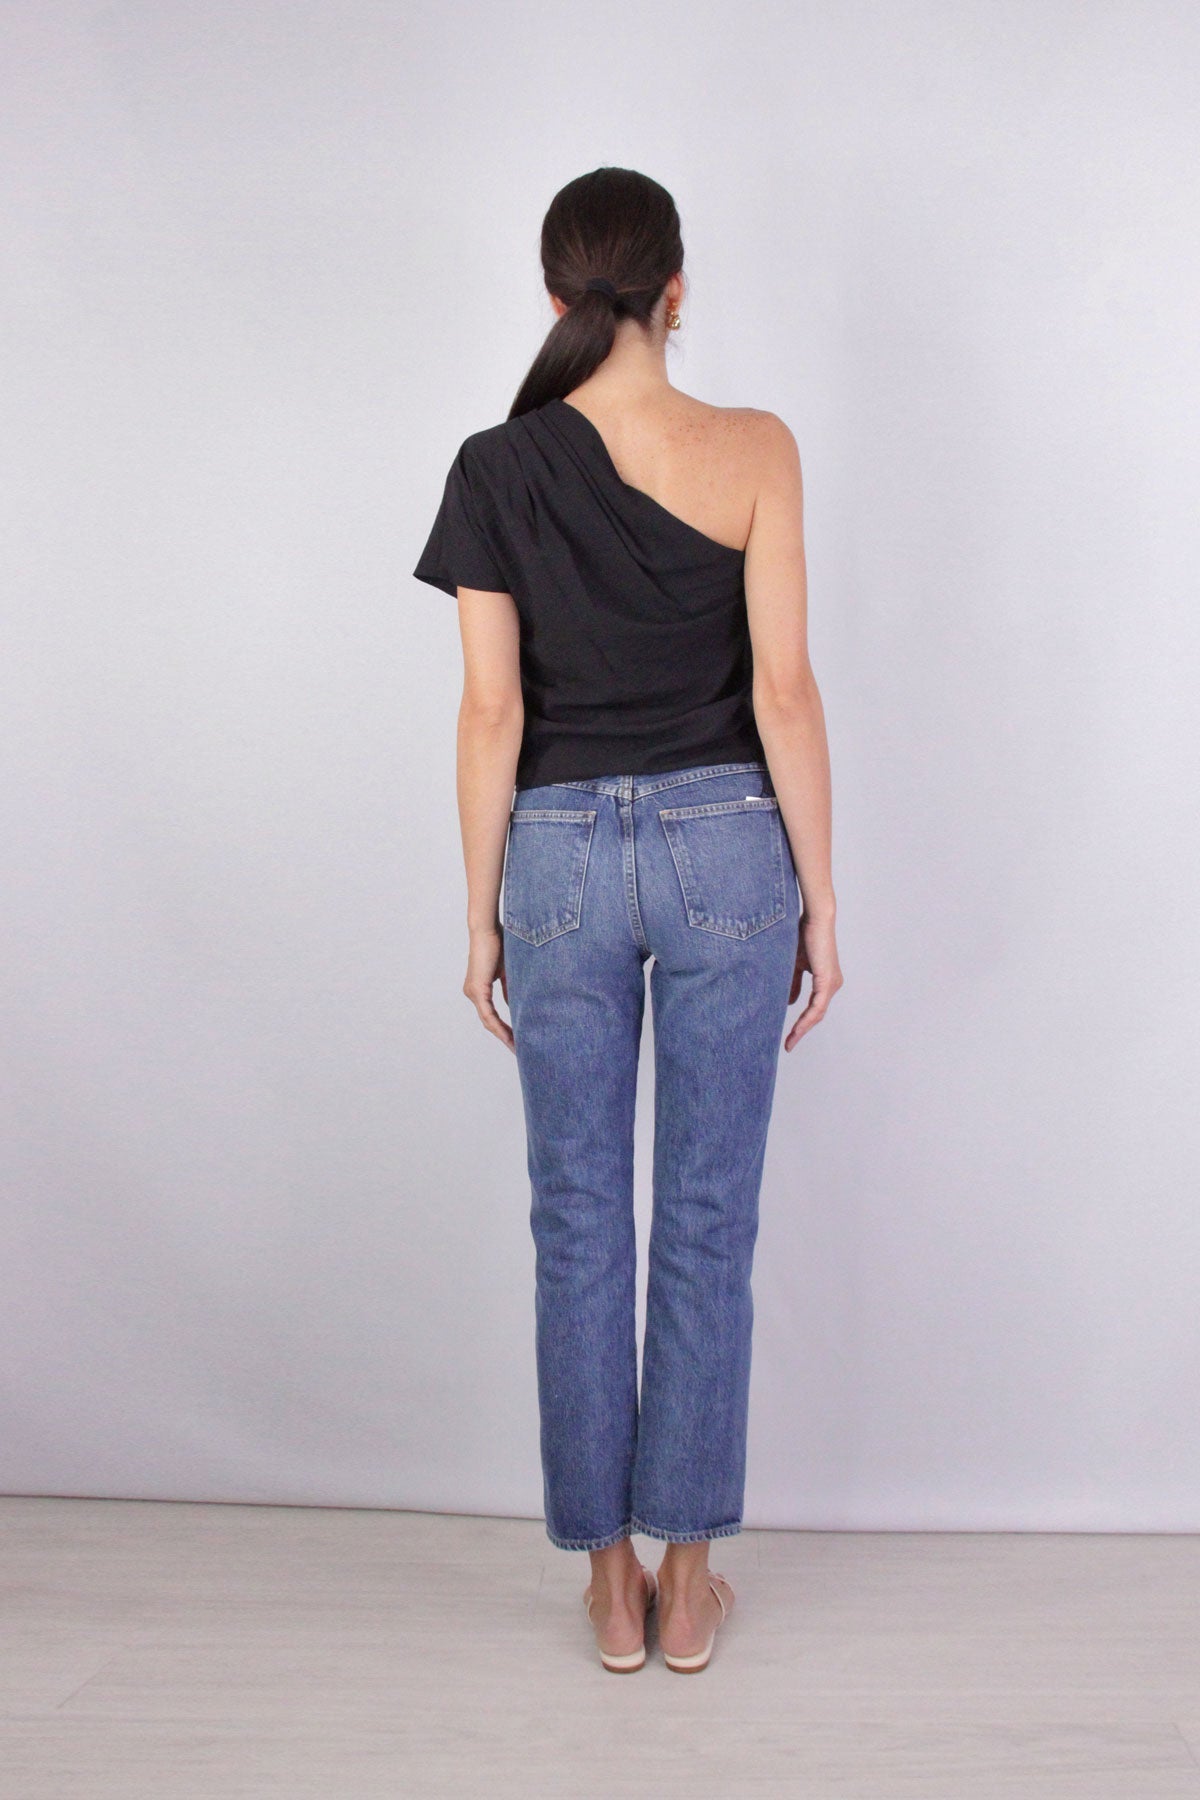 Single Shoulder Cascade Drape Top in Black - shop-olivia.com